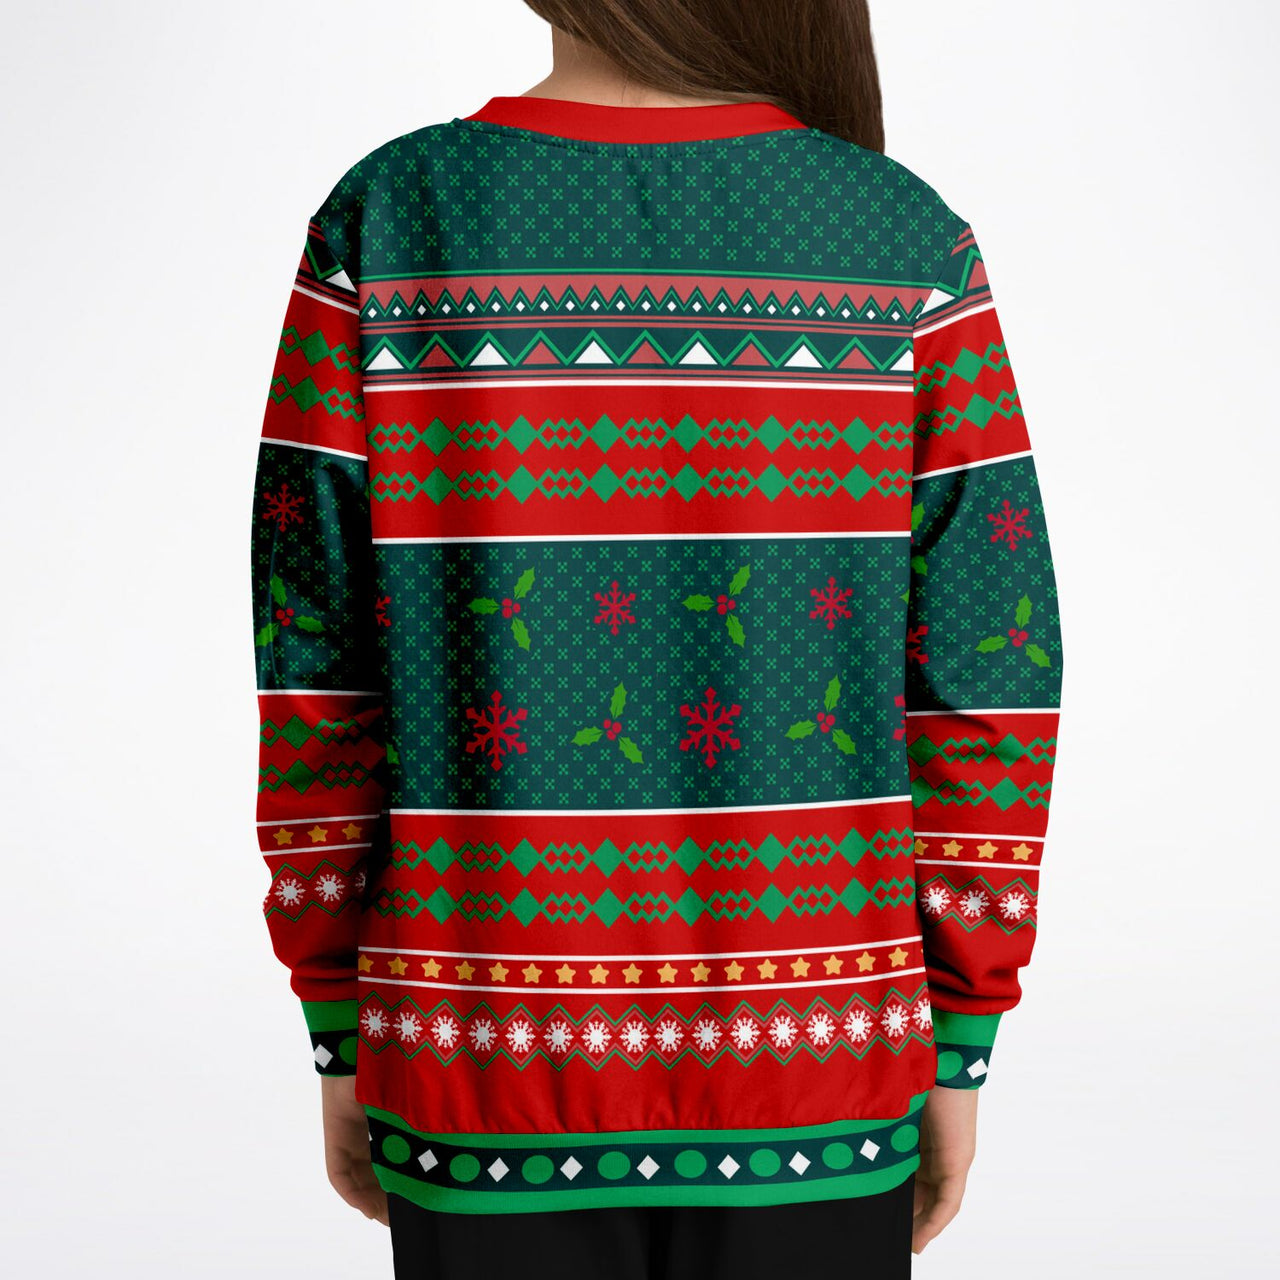 I put out for Santa Ugly Christmas Fashion Youth Sweatshirt – AOP